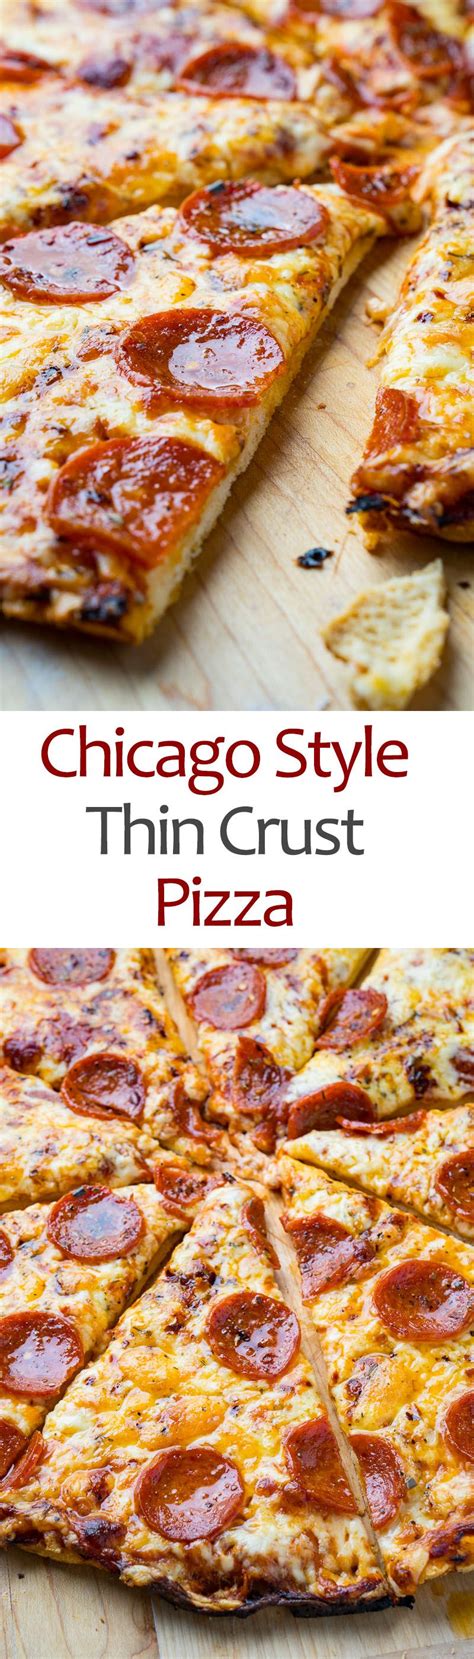 Chicago Style Thin Crust Pizza Recipe Thin Crust Pizza Pizza